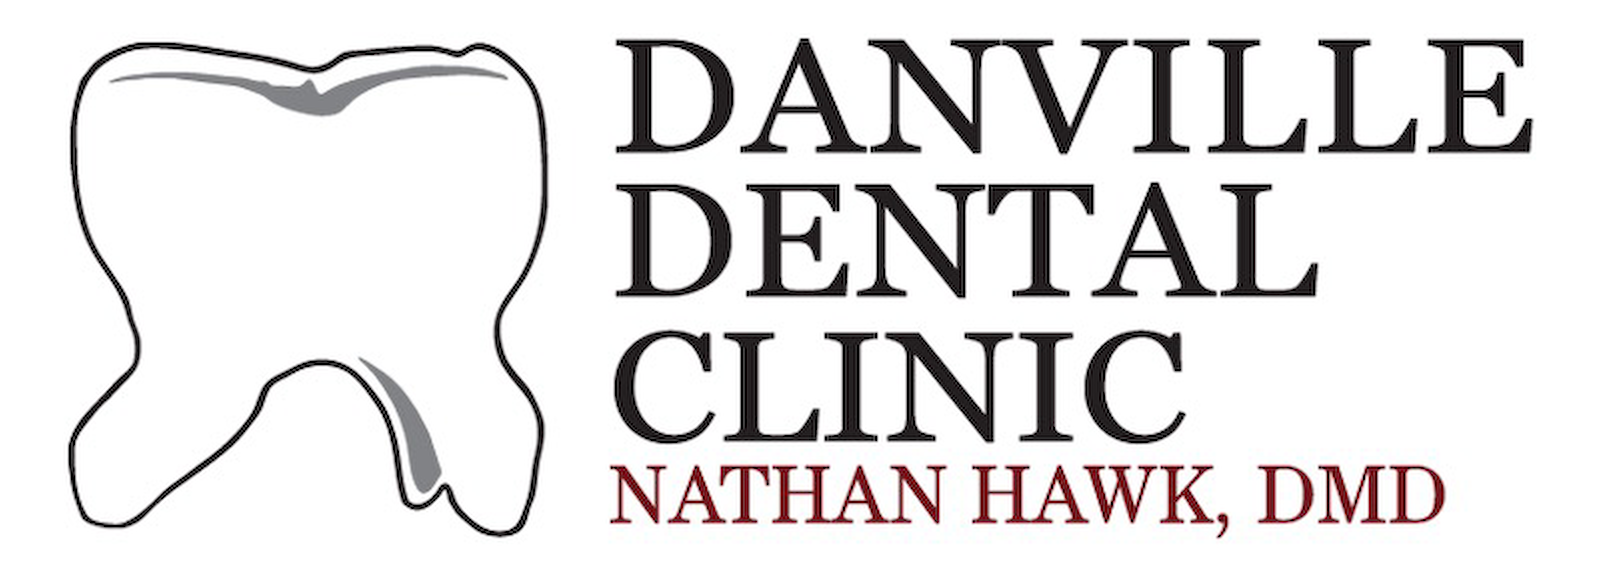 Danville Dental Clinic